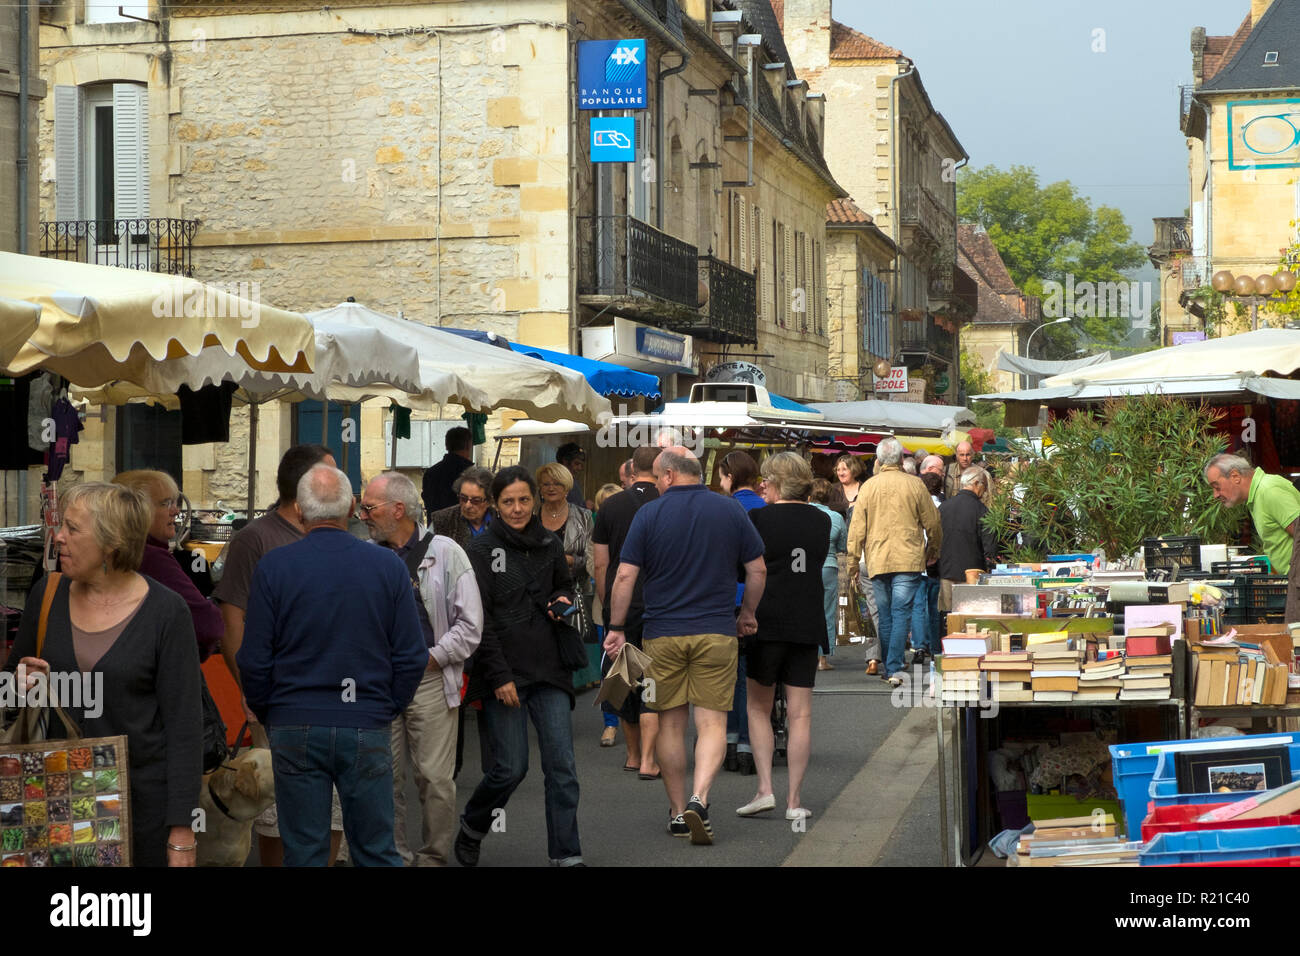 St-Cyprien, Dordogne, France - 24th September 2015: Crowded street at the Sunday street market in St-Cyprien, Dordogne, France Stock Photo